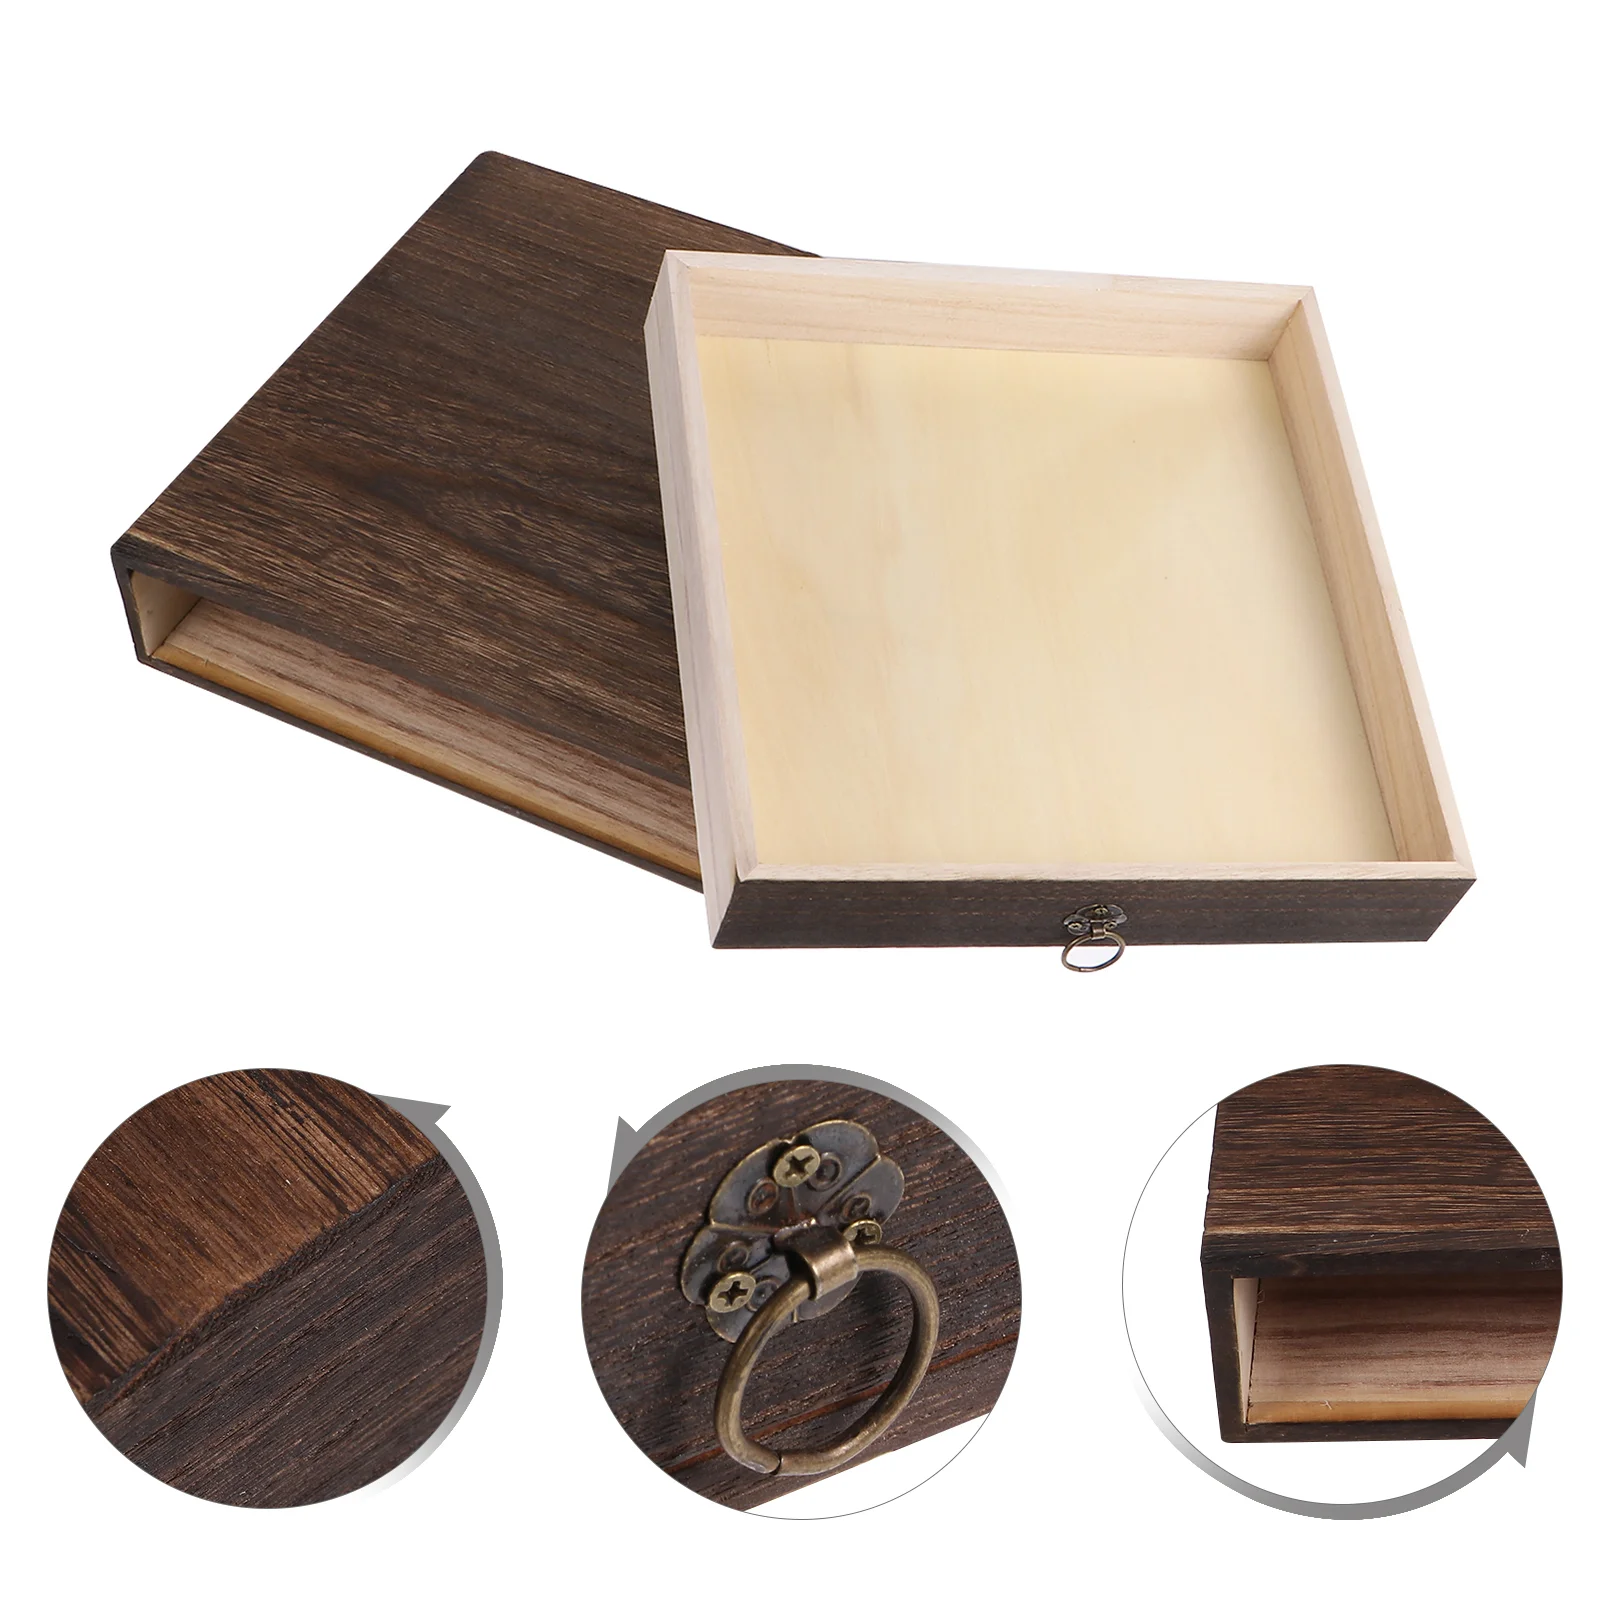 Vintage Wood Desktop Organizing Box Multi-Layer Drawer Type Jewelry Storage Case Dustproof Document Box With Handle